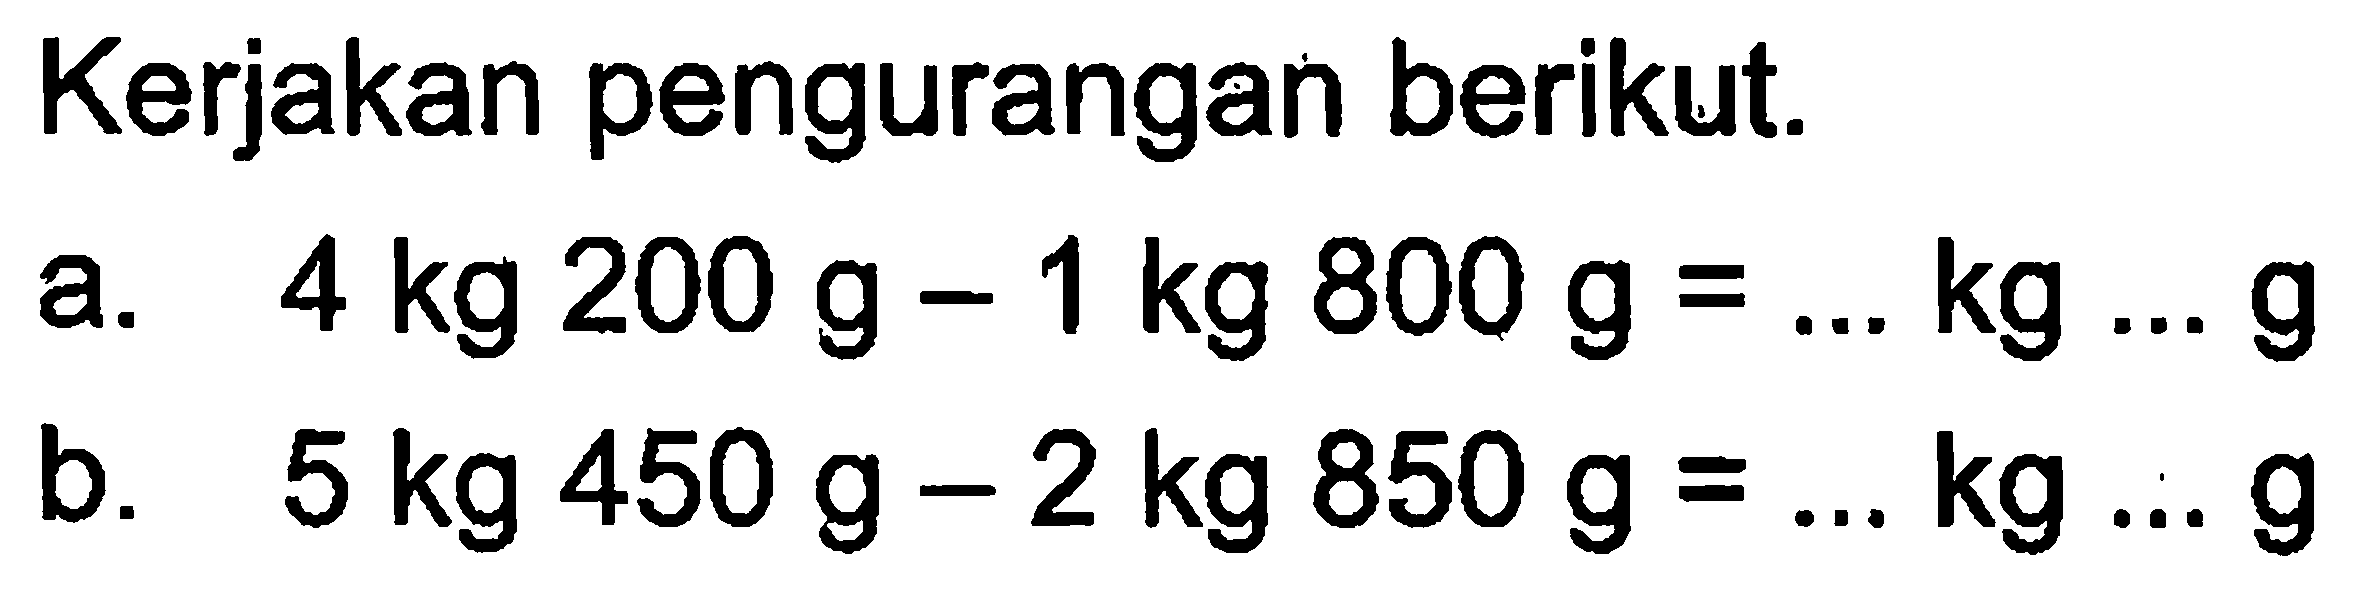 Kerjakan pengurangan berikut. a. 4 kg 200 g - 1 kg 800 g = ... kg ... g b. 5 kg 450 g - 2 kg 850 g = ... kg ... g